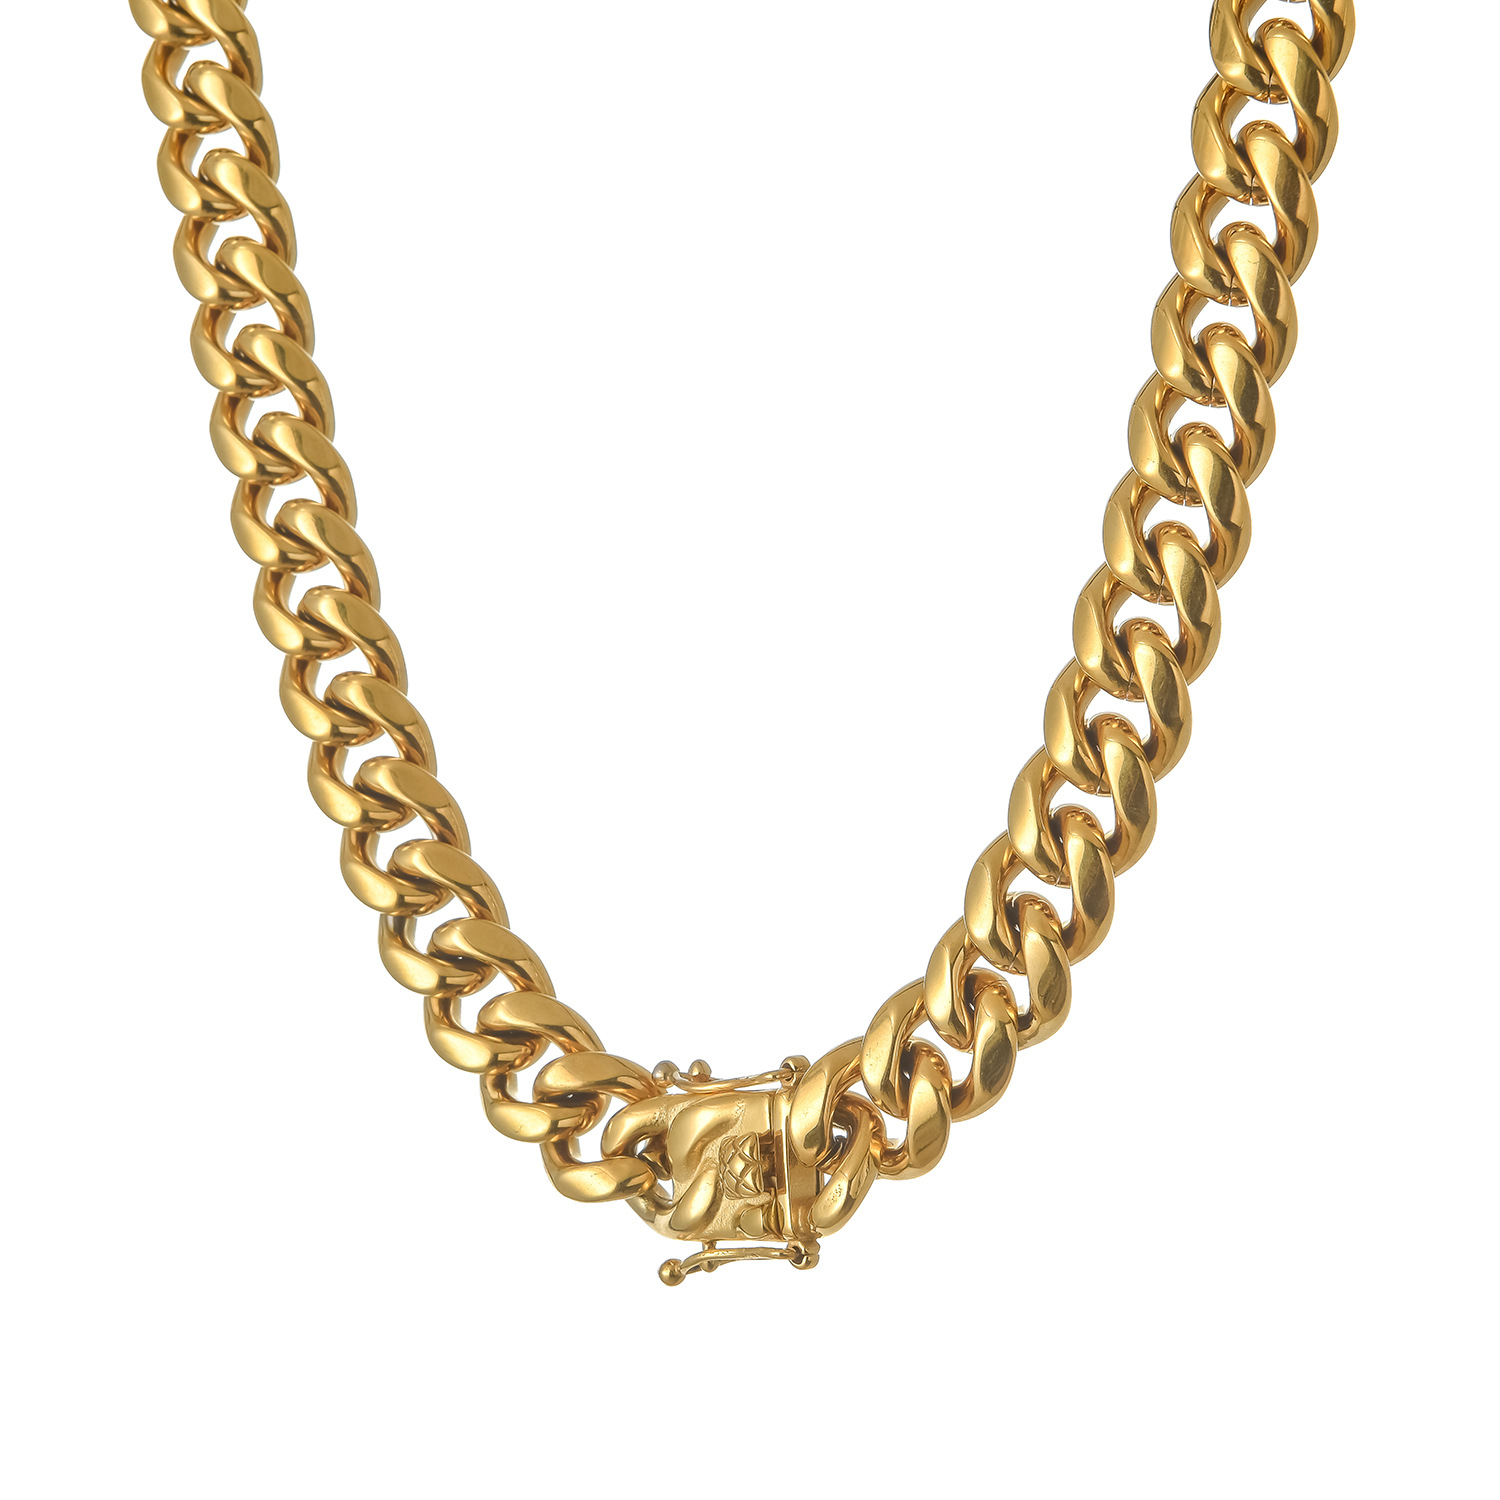 3:Necklace Gold 14mm*60cm